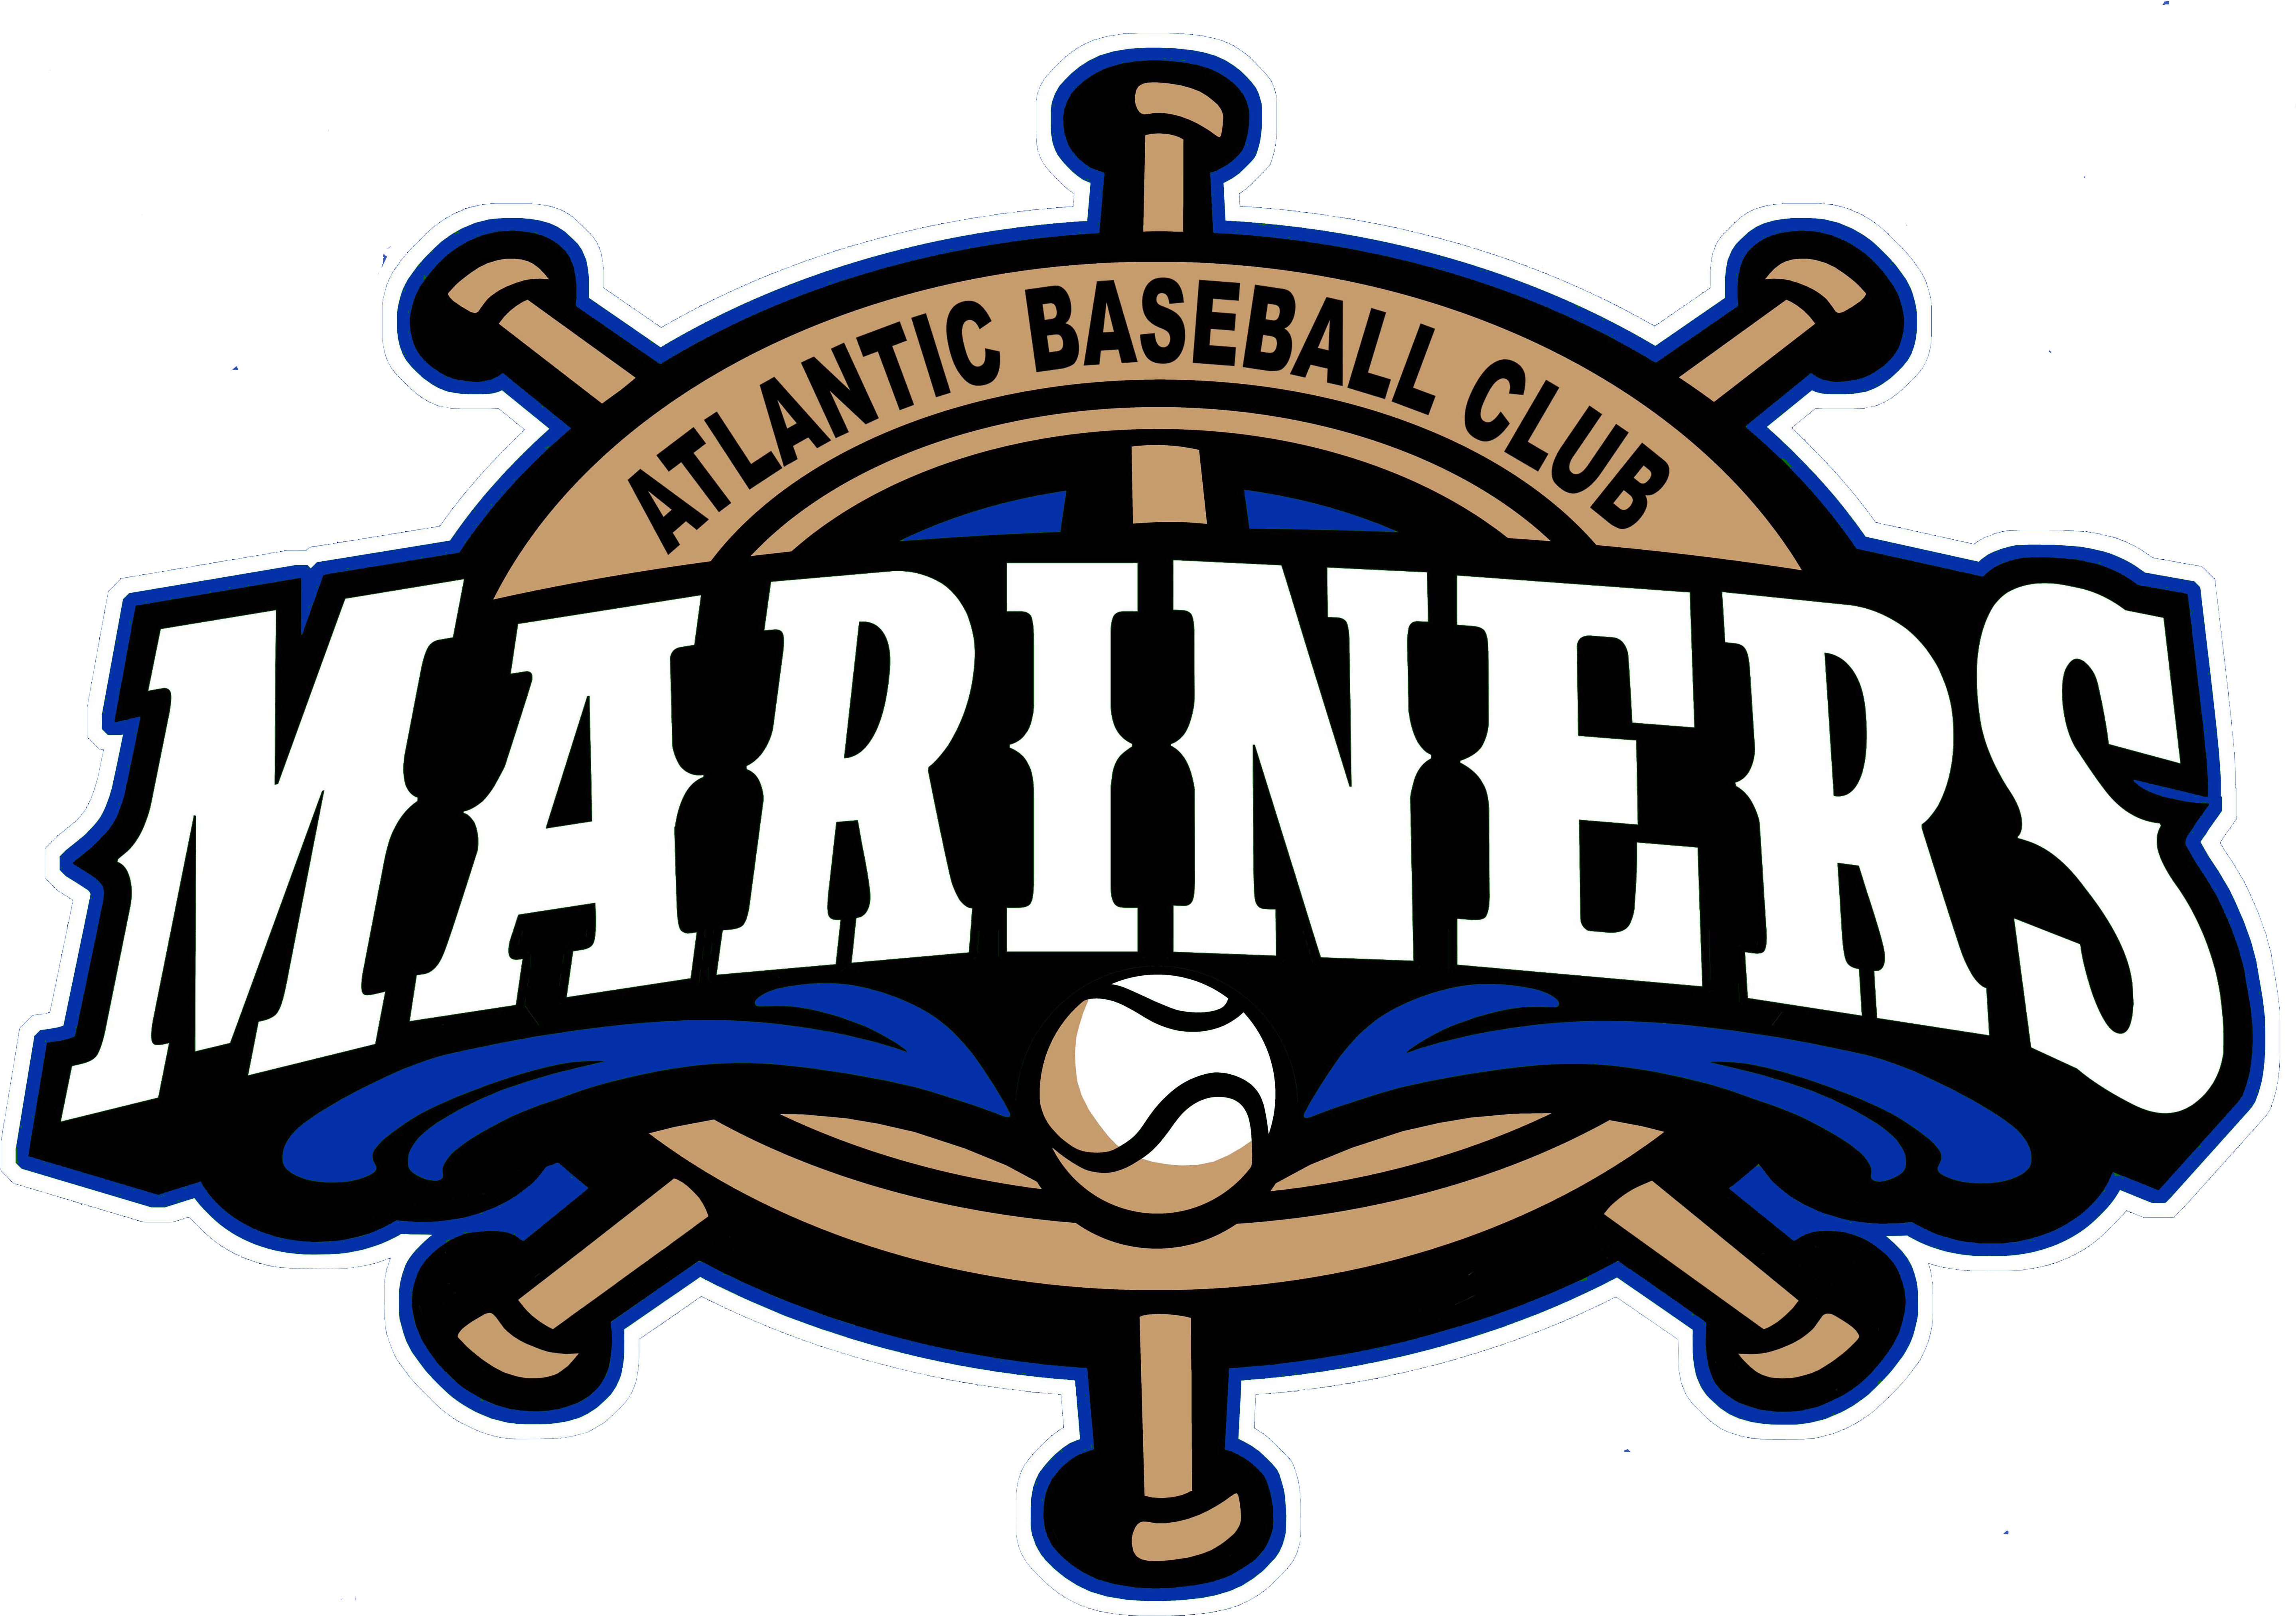 Atlantic Baseball Club Mariners (5922x4377)